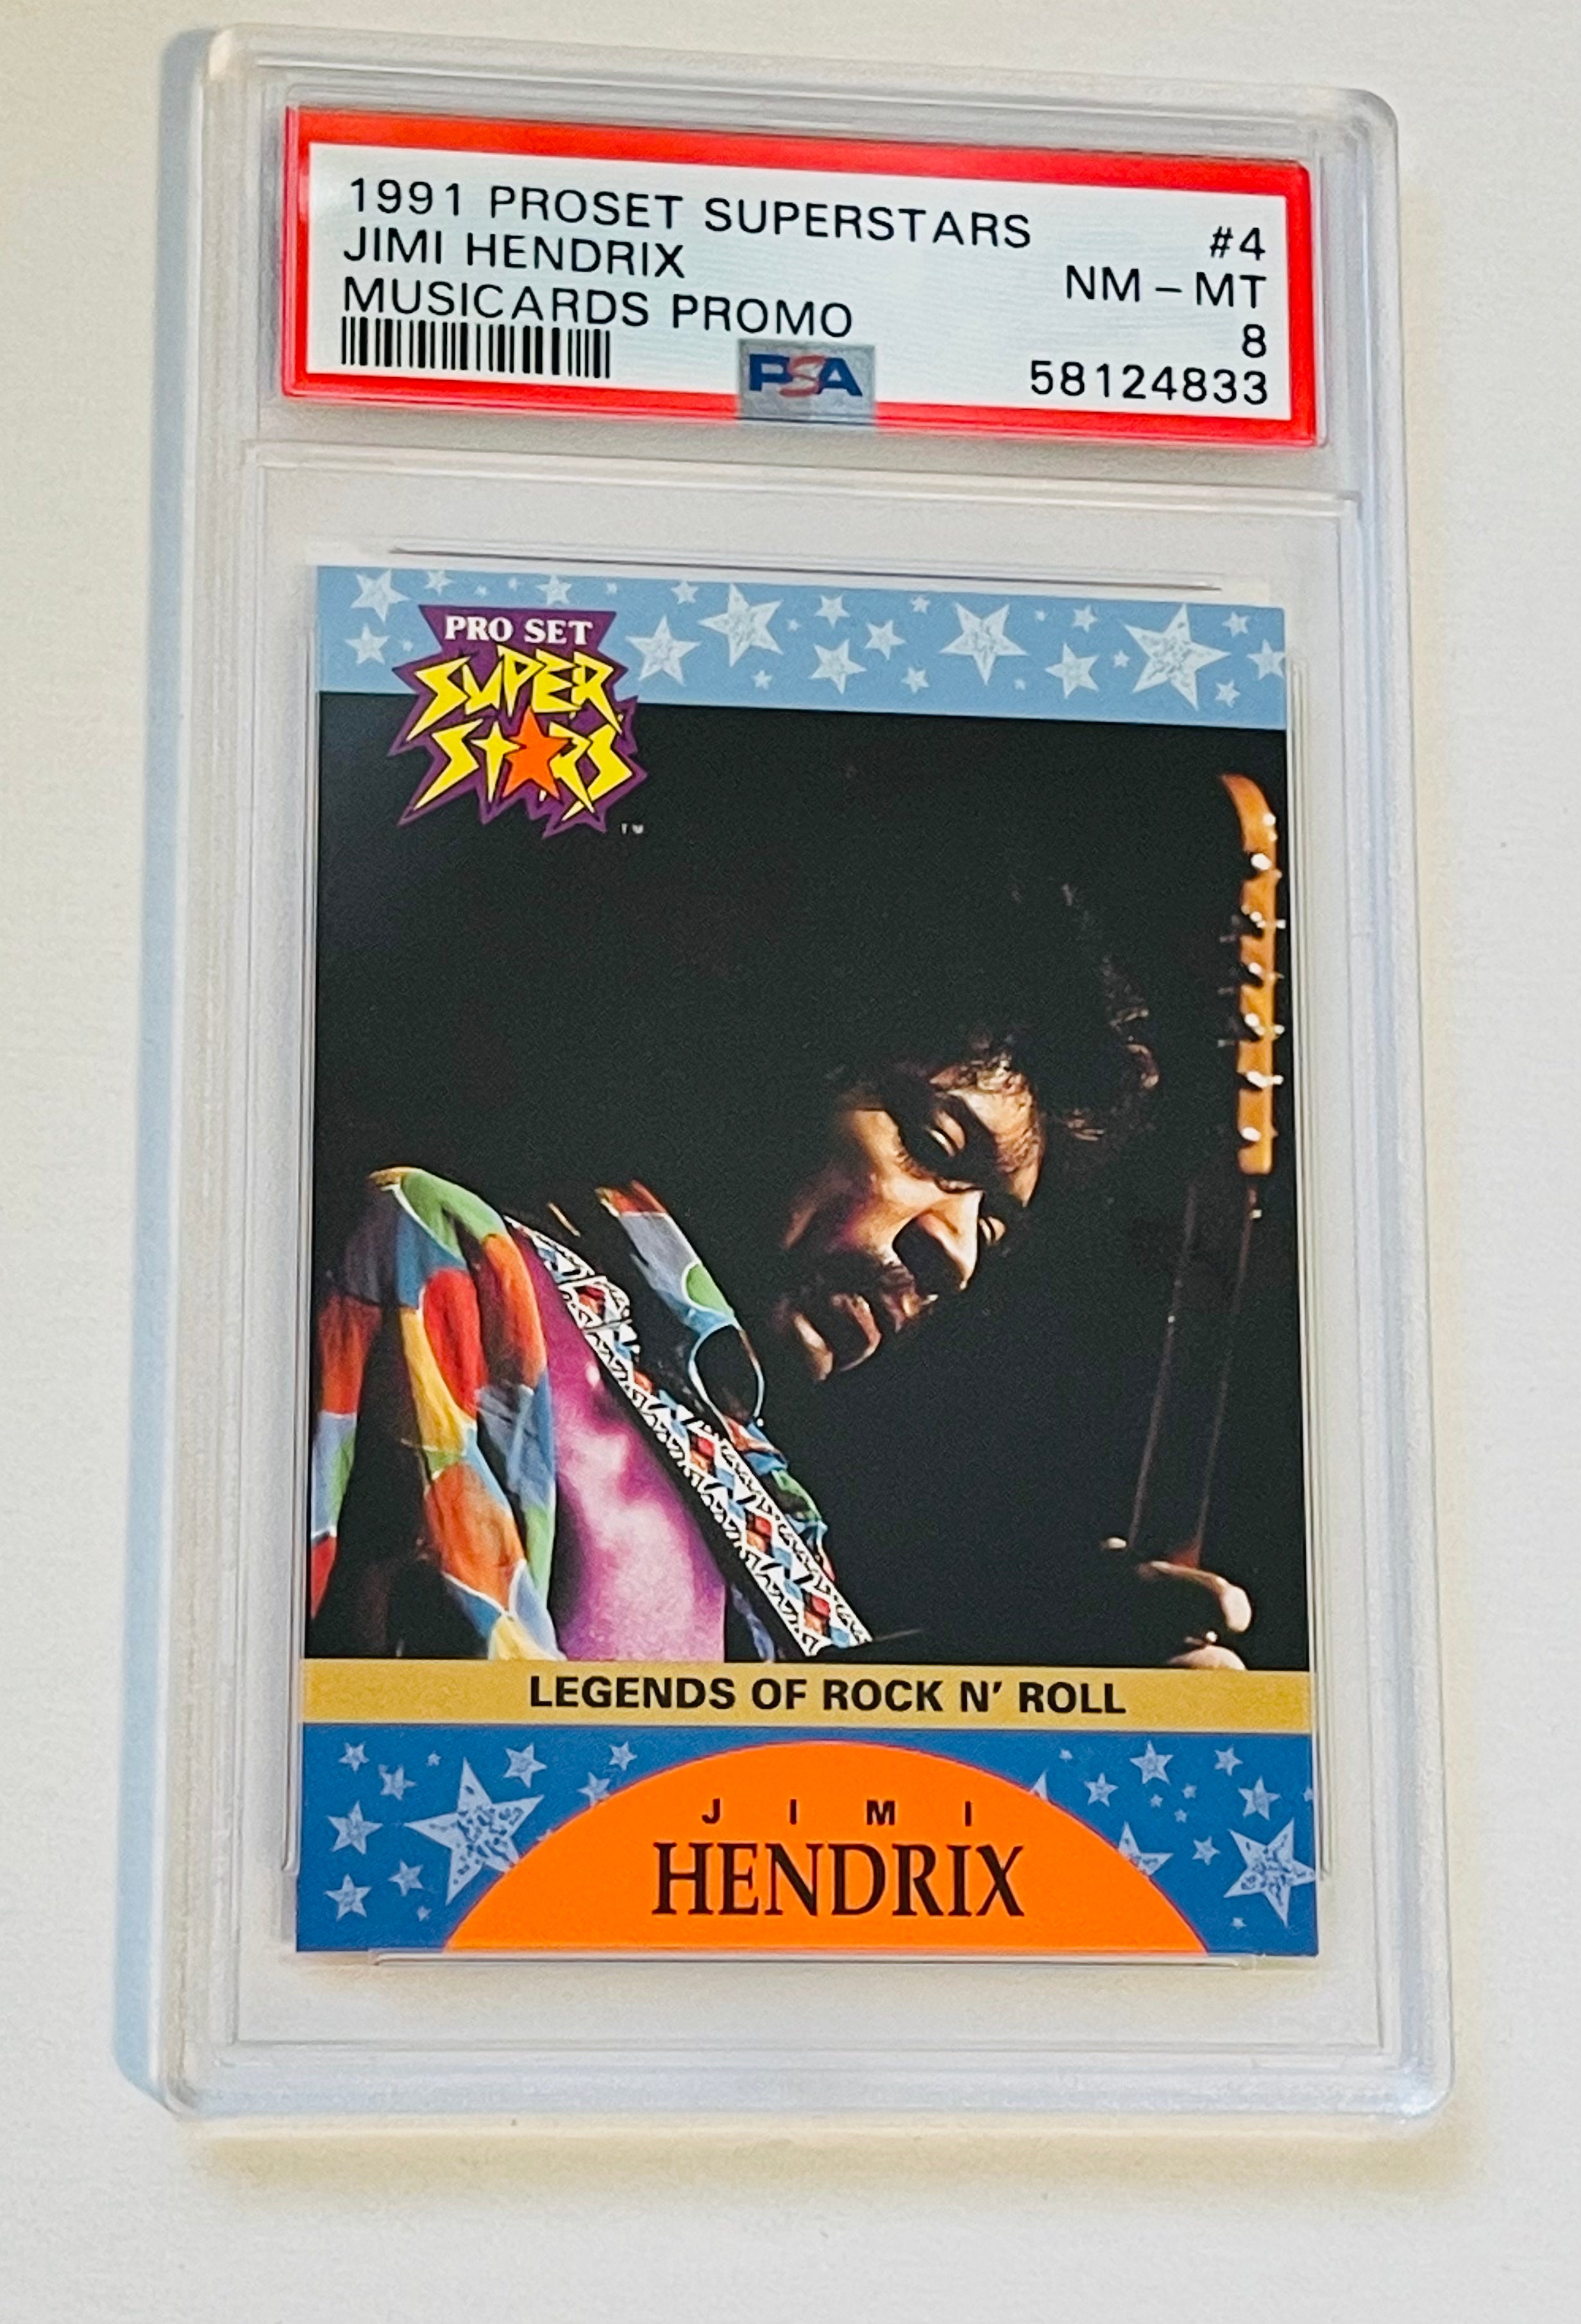 Jimi Hendrix Proset music promo PSA 8 high grade card